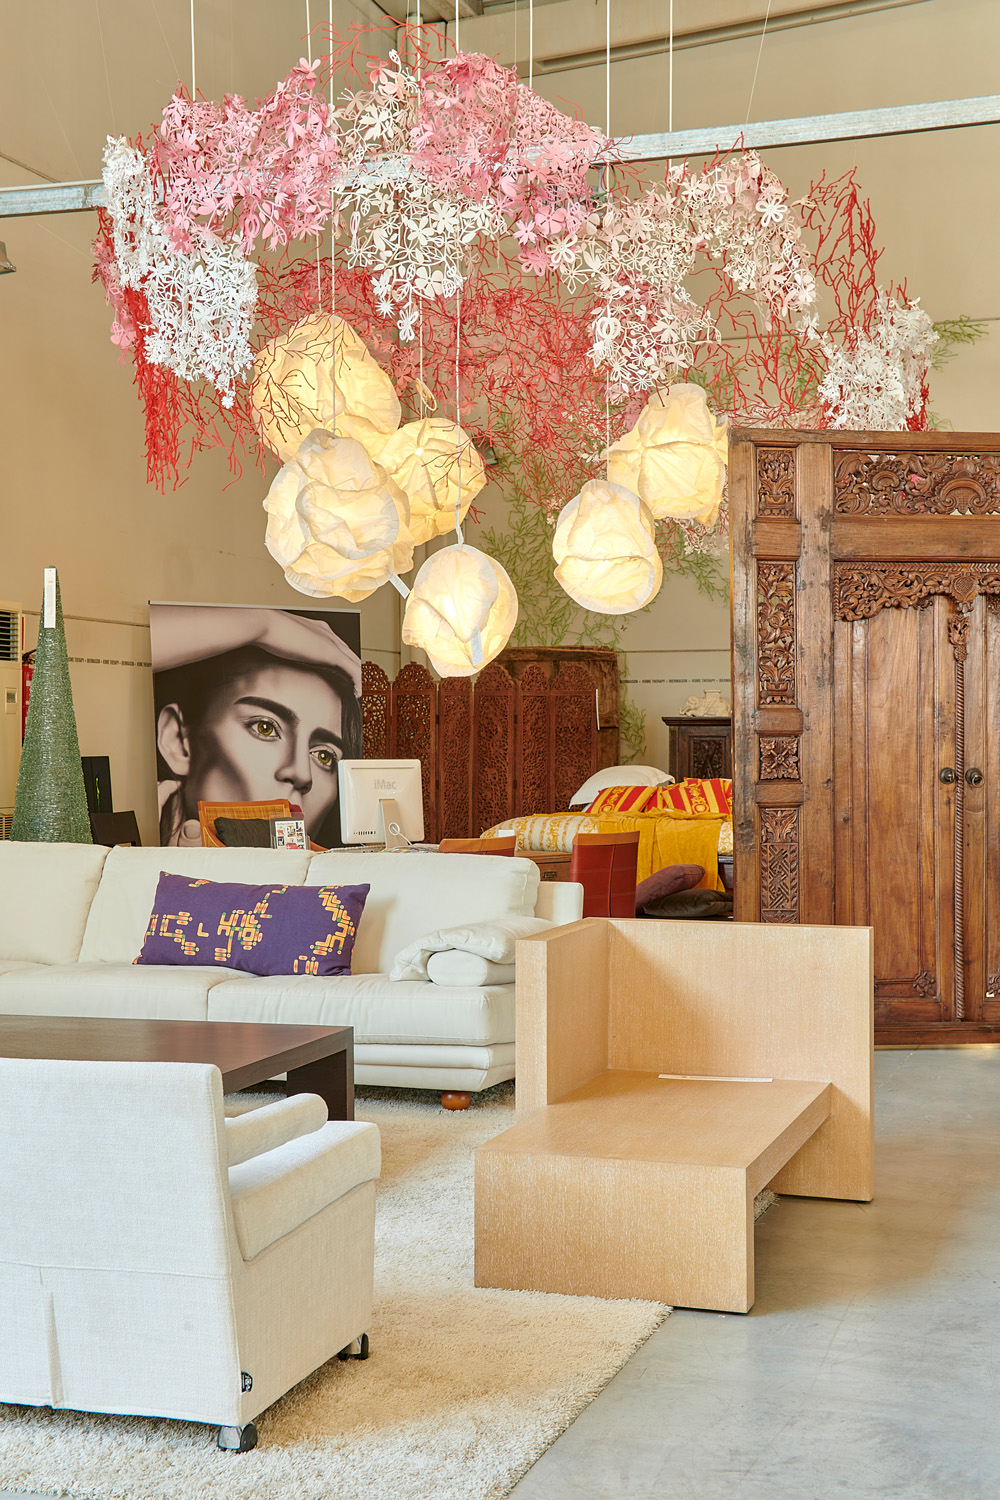 Lighting by Ibermaison - luxury interior design and furniture in Ibiza